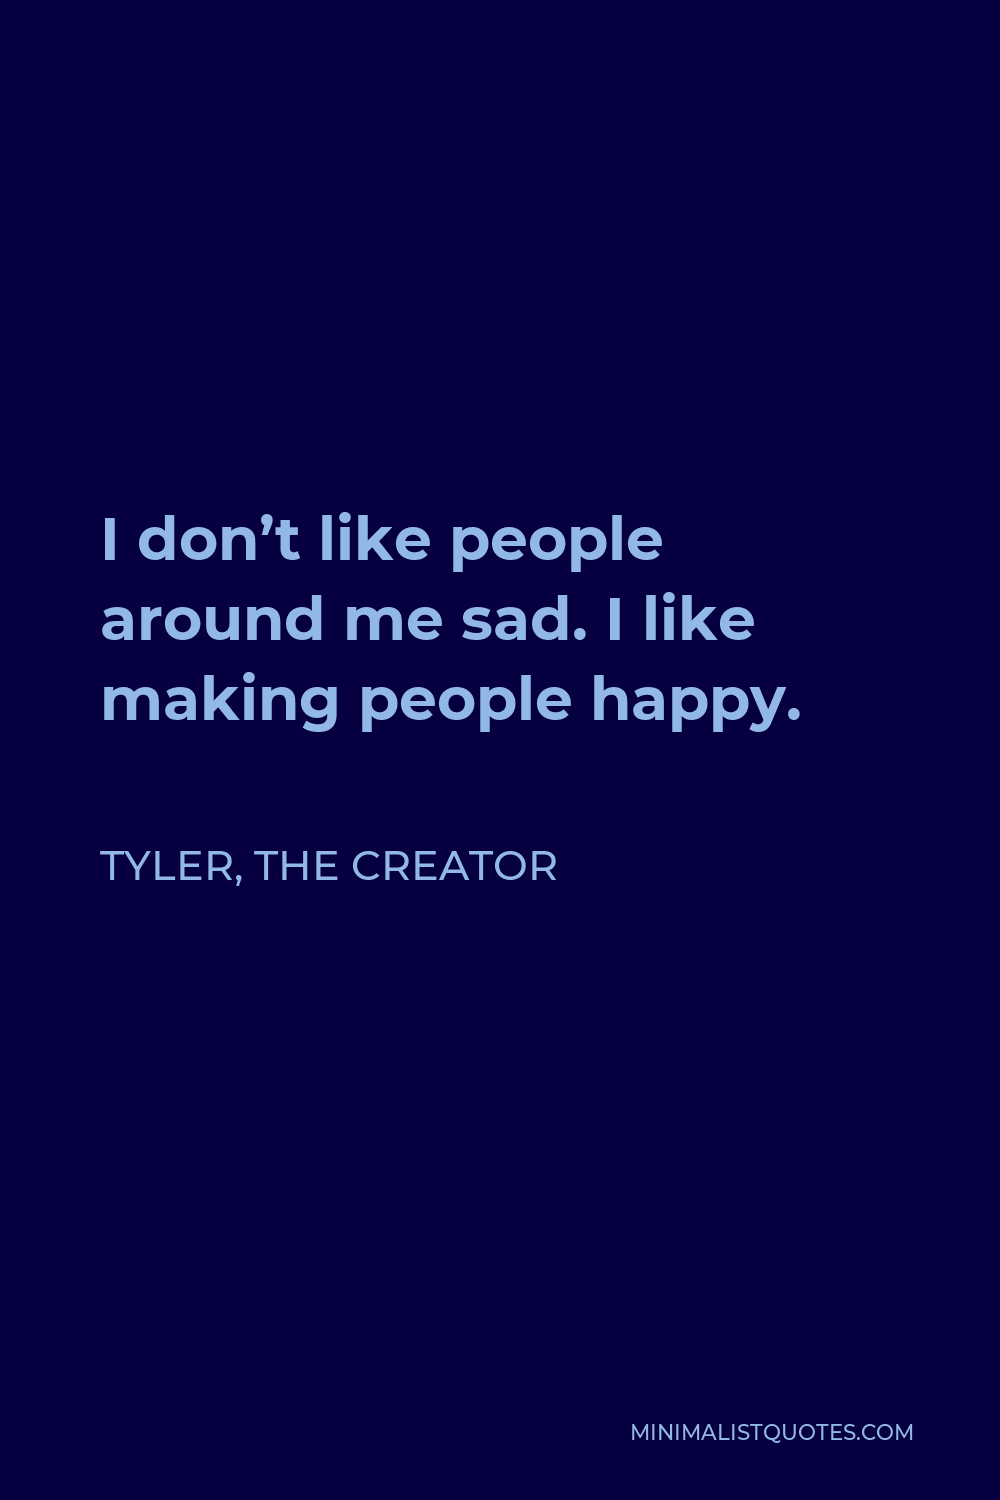 Tyler, the Creator Quote - I don’t like people around me sad. I like making people happy.